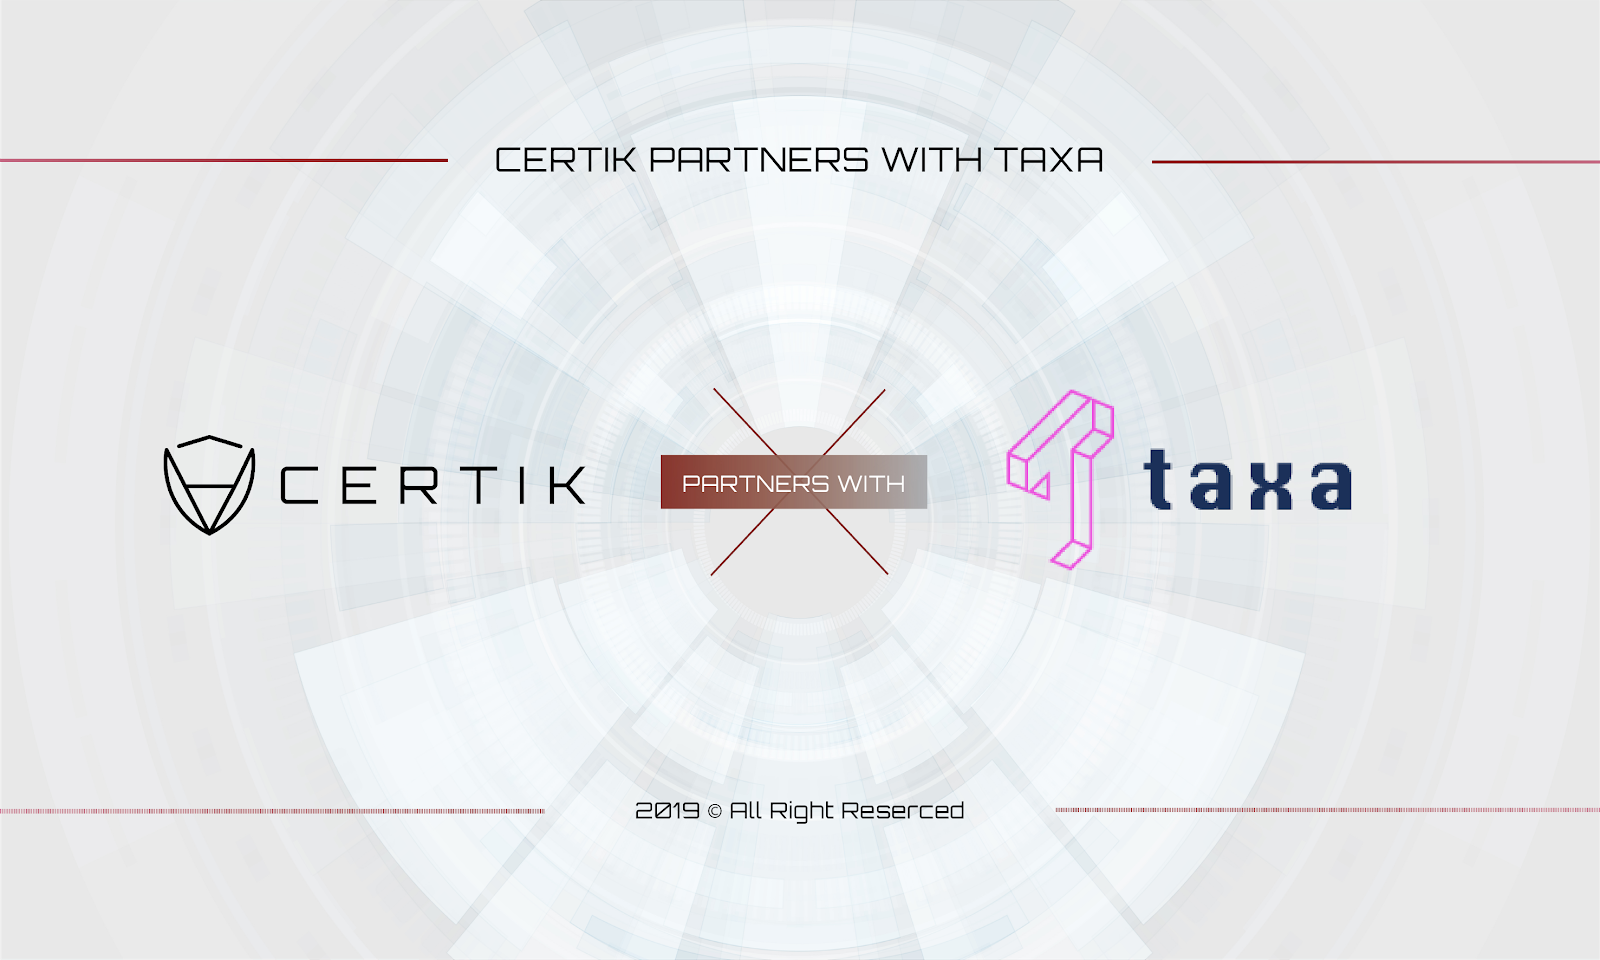 Partnership Spotlight: Taxa Network